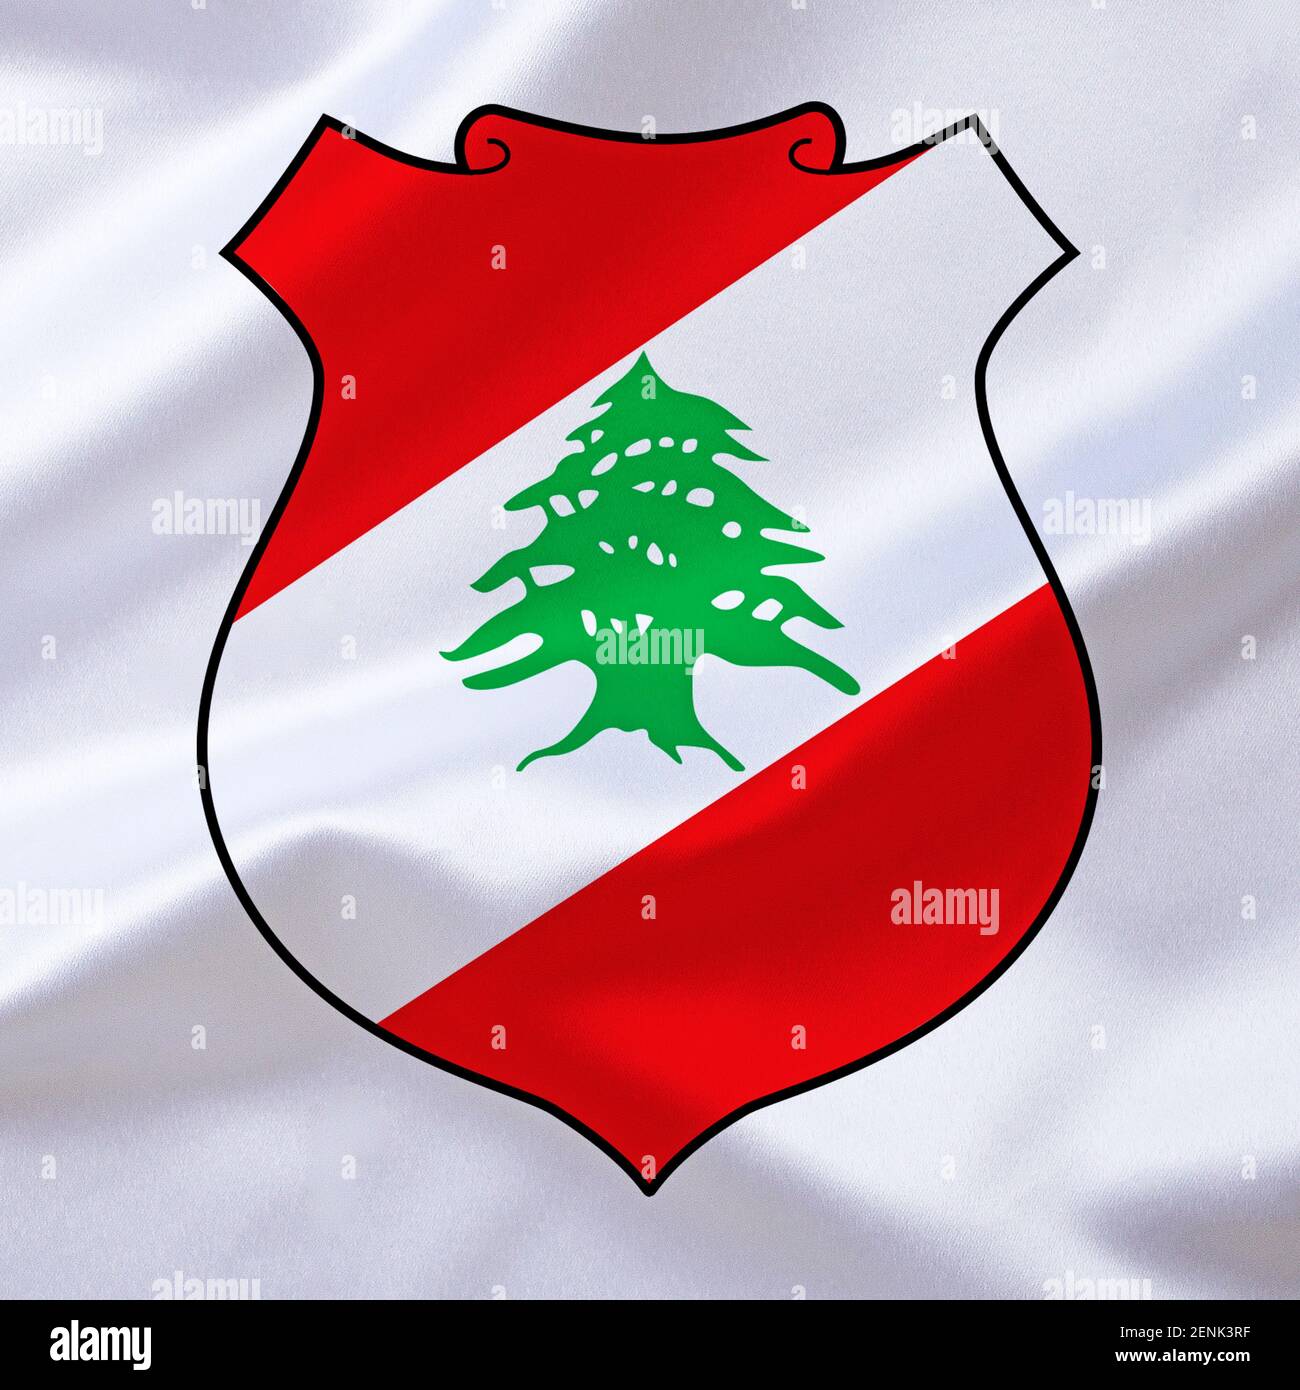 Das Wappen von Libanon Stockfoto